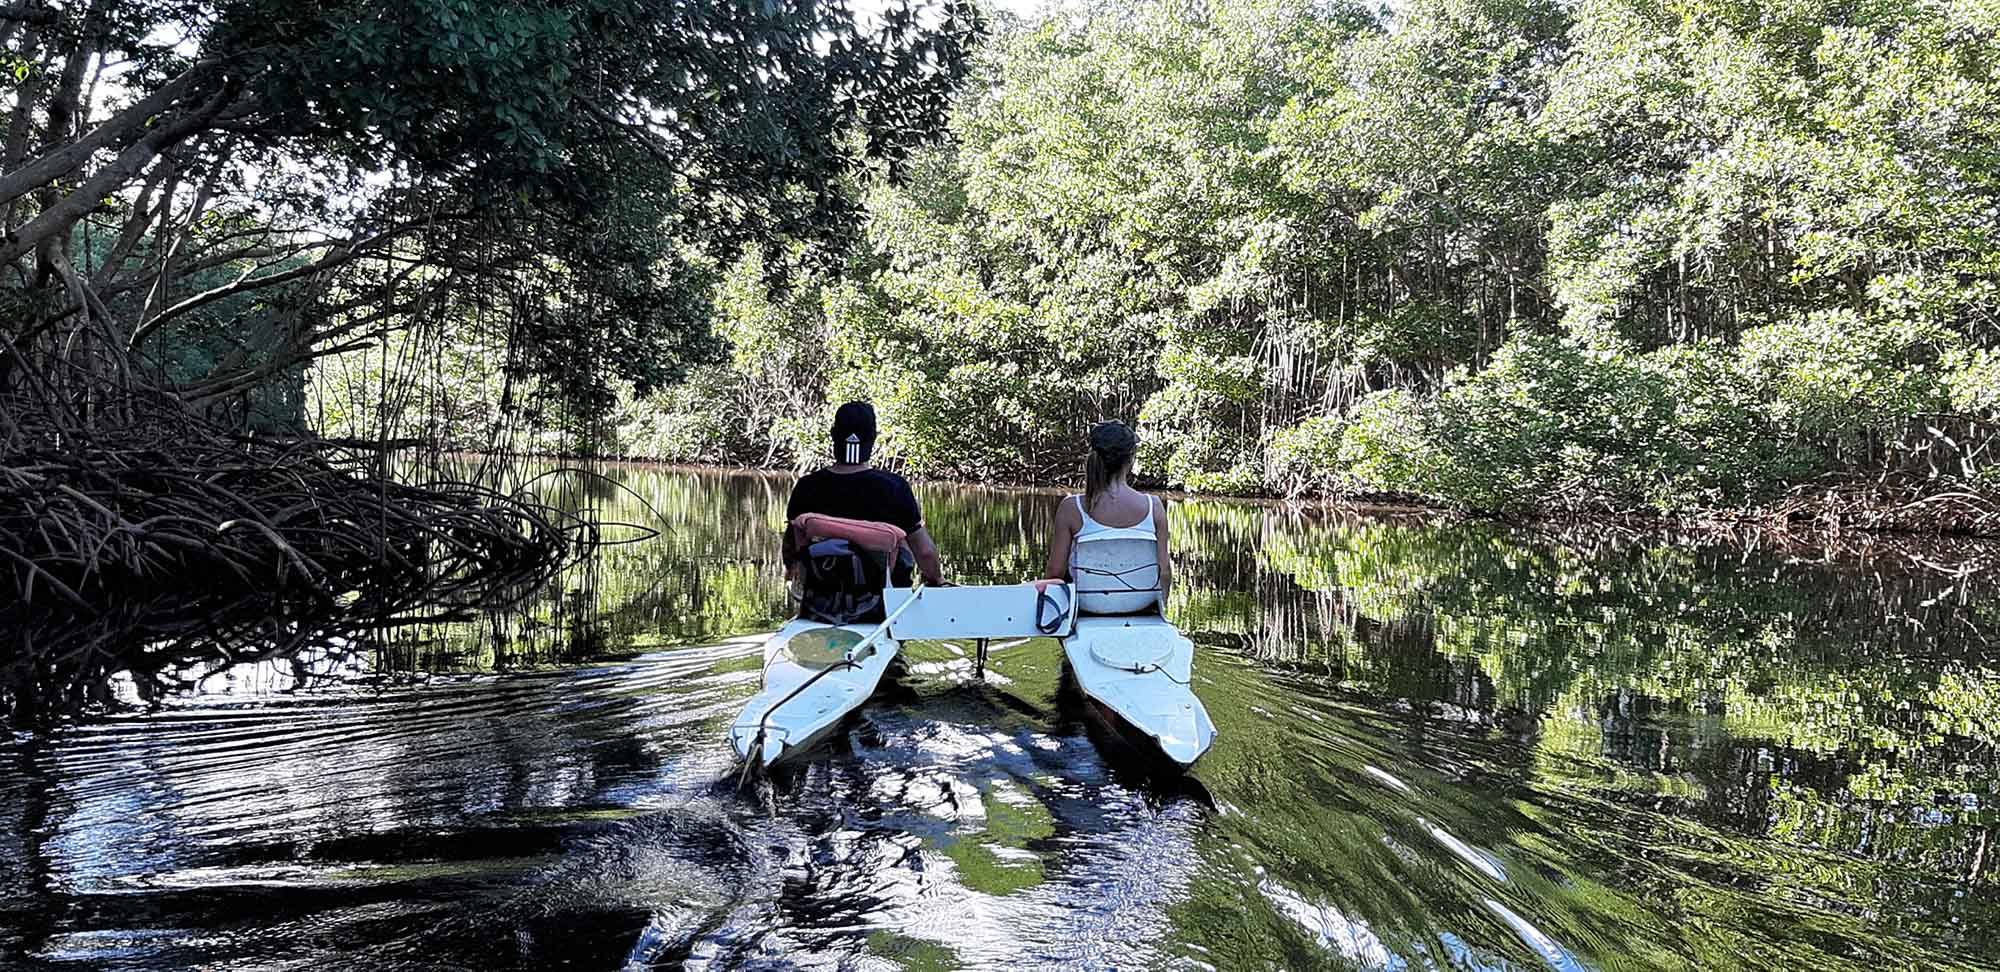 Bel Mangrov - Sea cycling Offer Explore the mangrove by sea bike